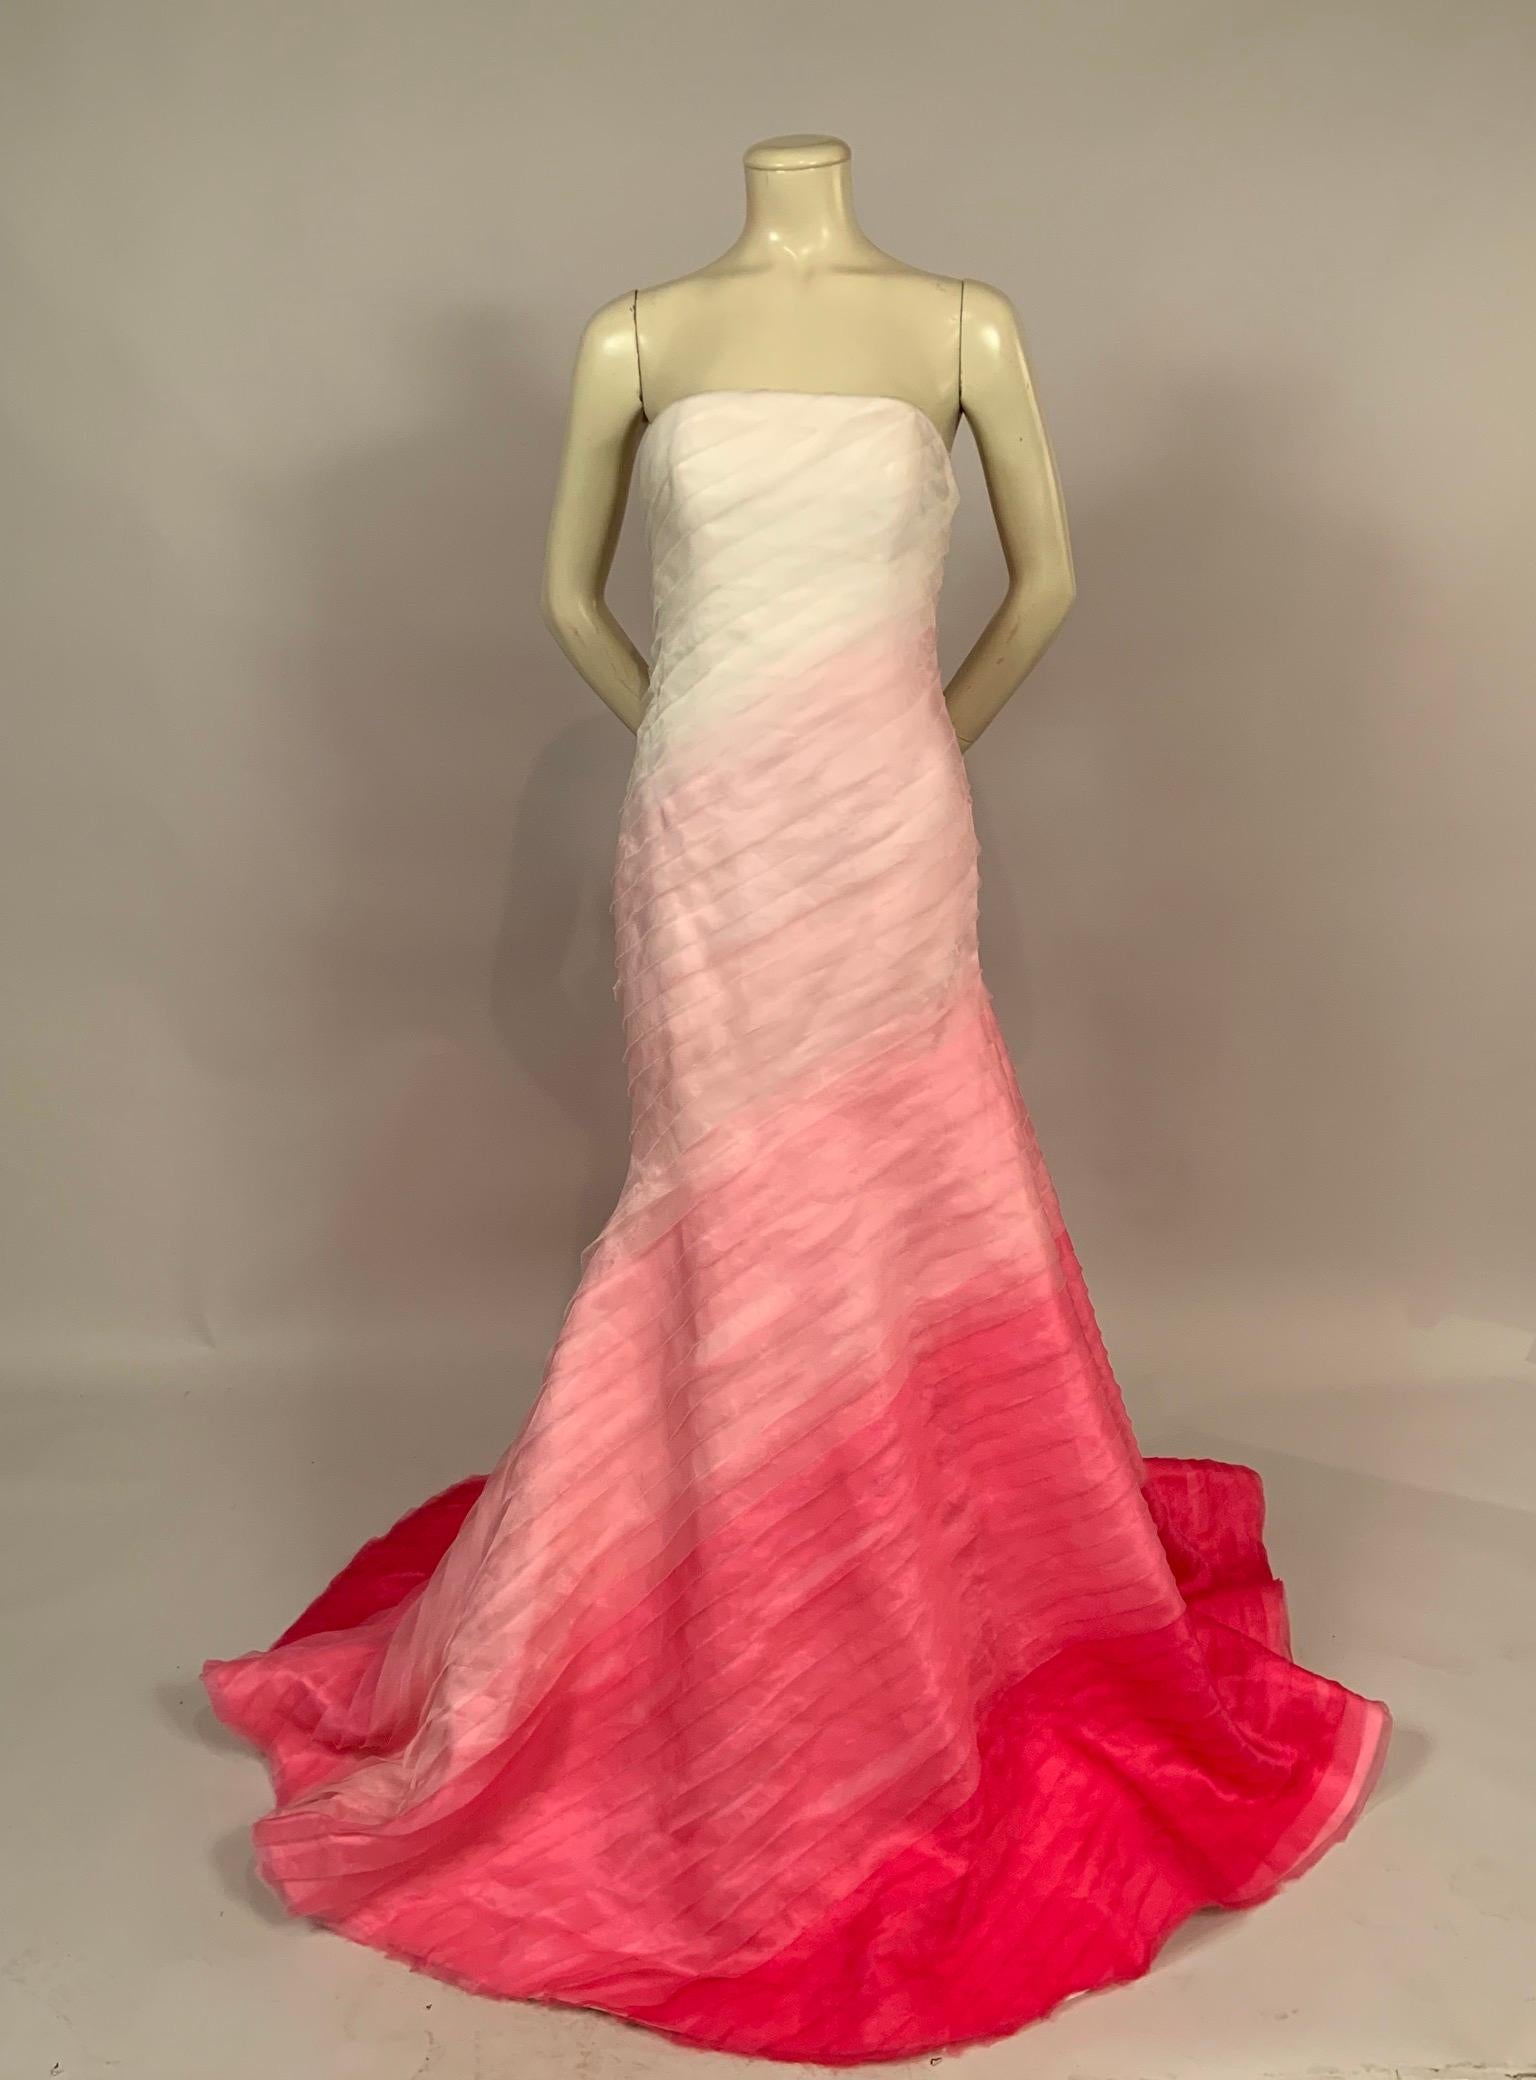 Lilly Pulitzer Silk Organza White to Shocking Pink Evening or Wedding Dress 8